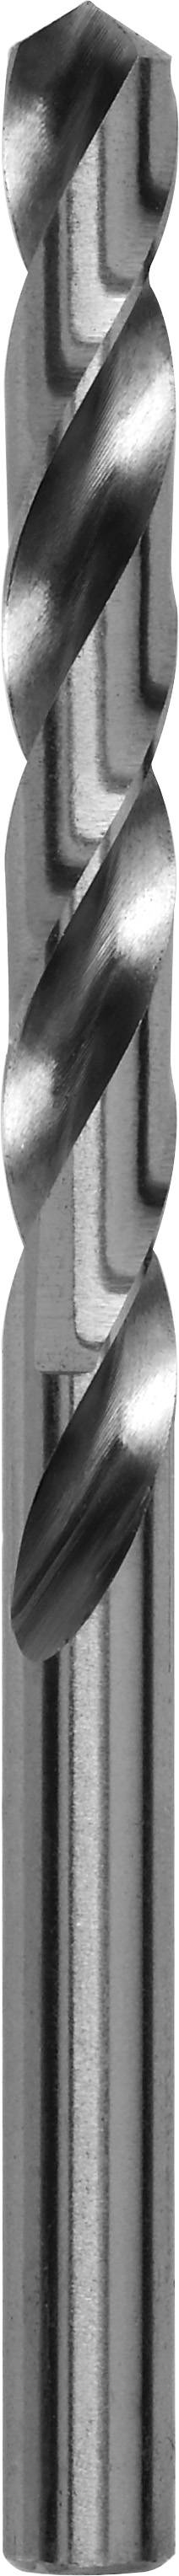 BOSCH HSS Metall-Spiralbohrer 8 mm 2609255053 Gesamtlänge 117 mm geschliffen DIN 338 Zylinderschaft